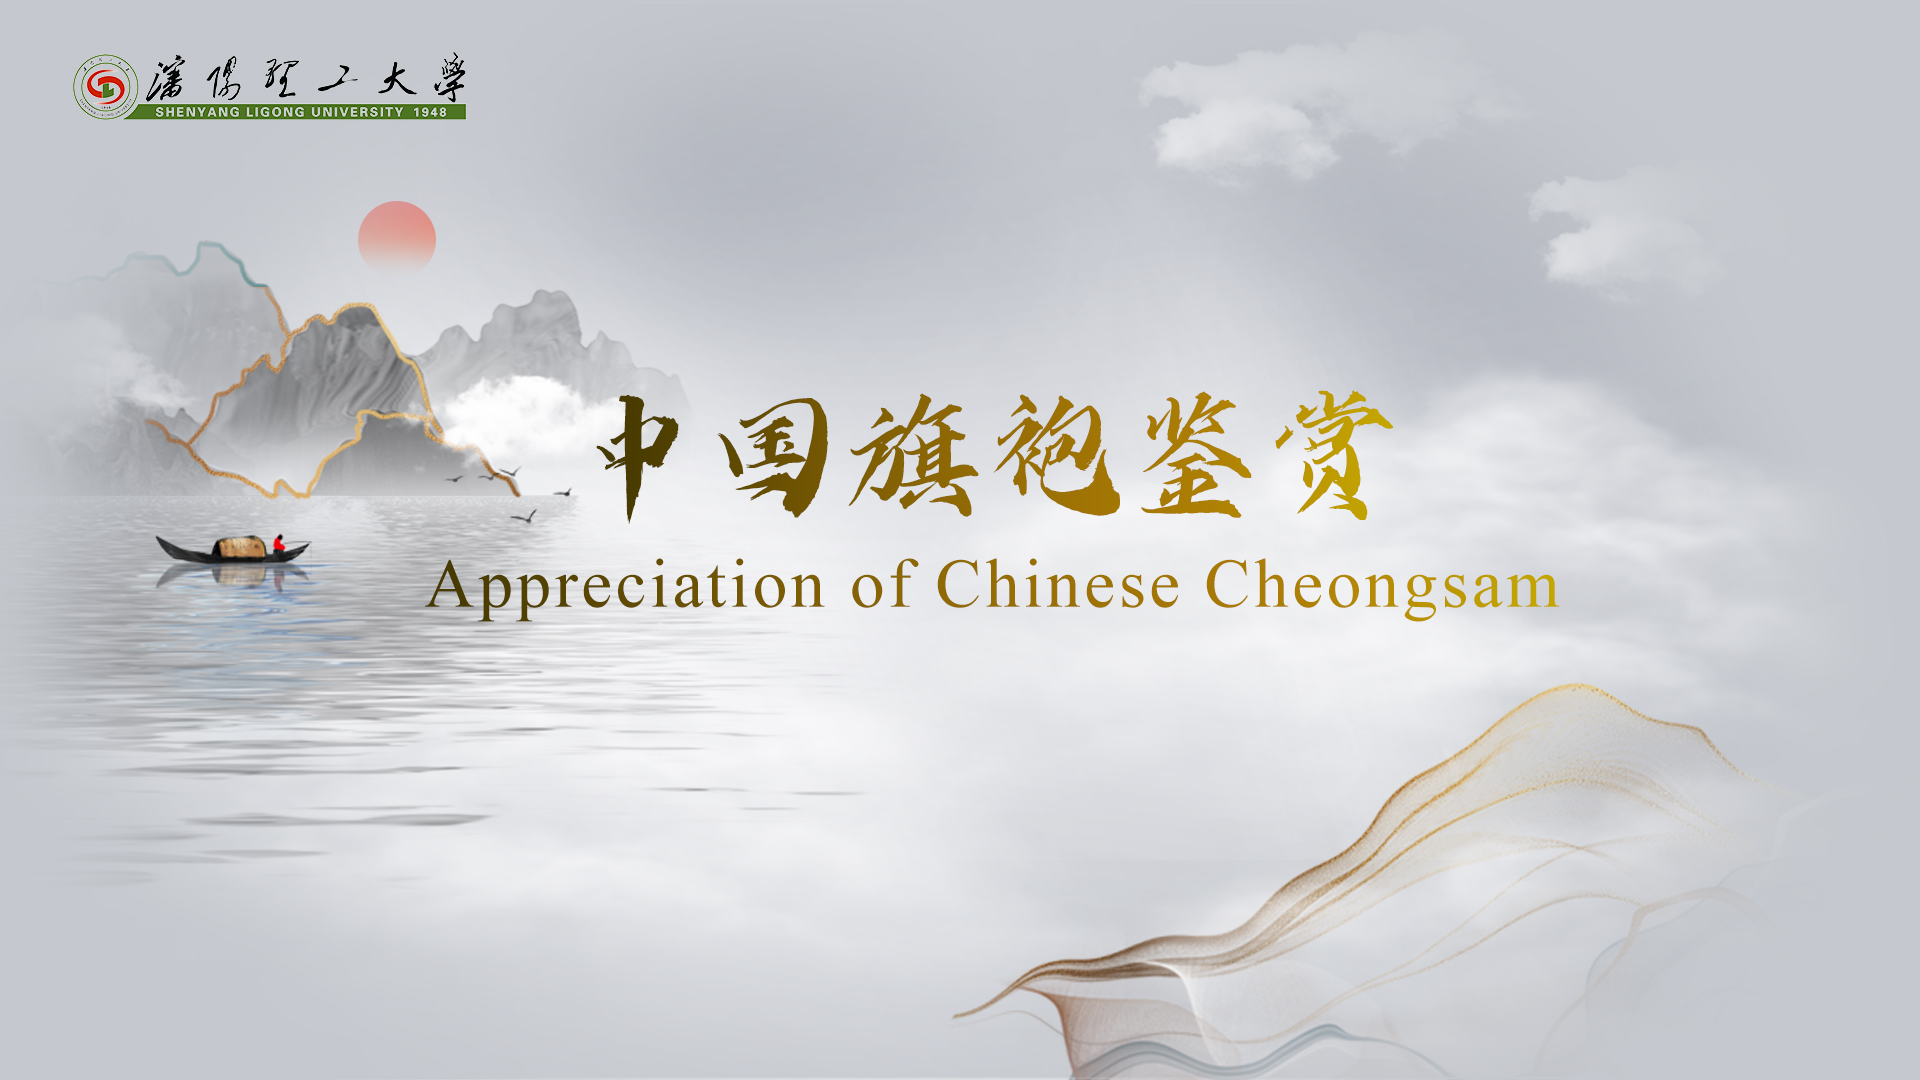 Appreciation of Chinese Cheongsam